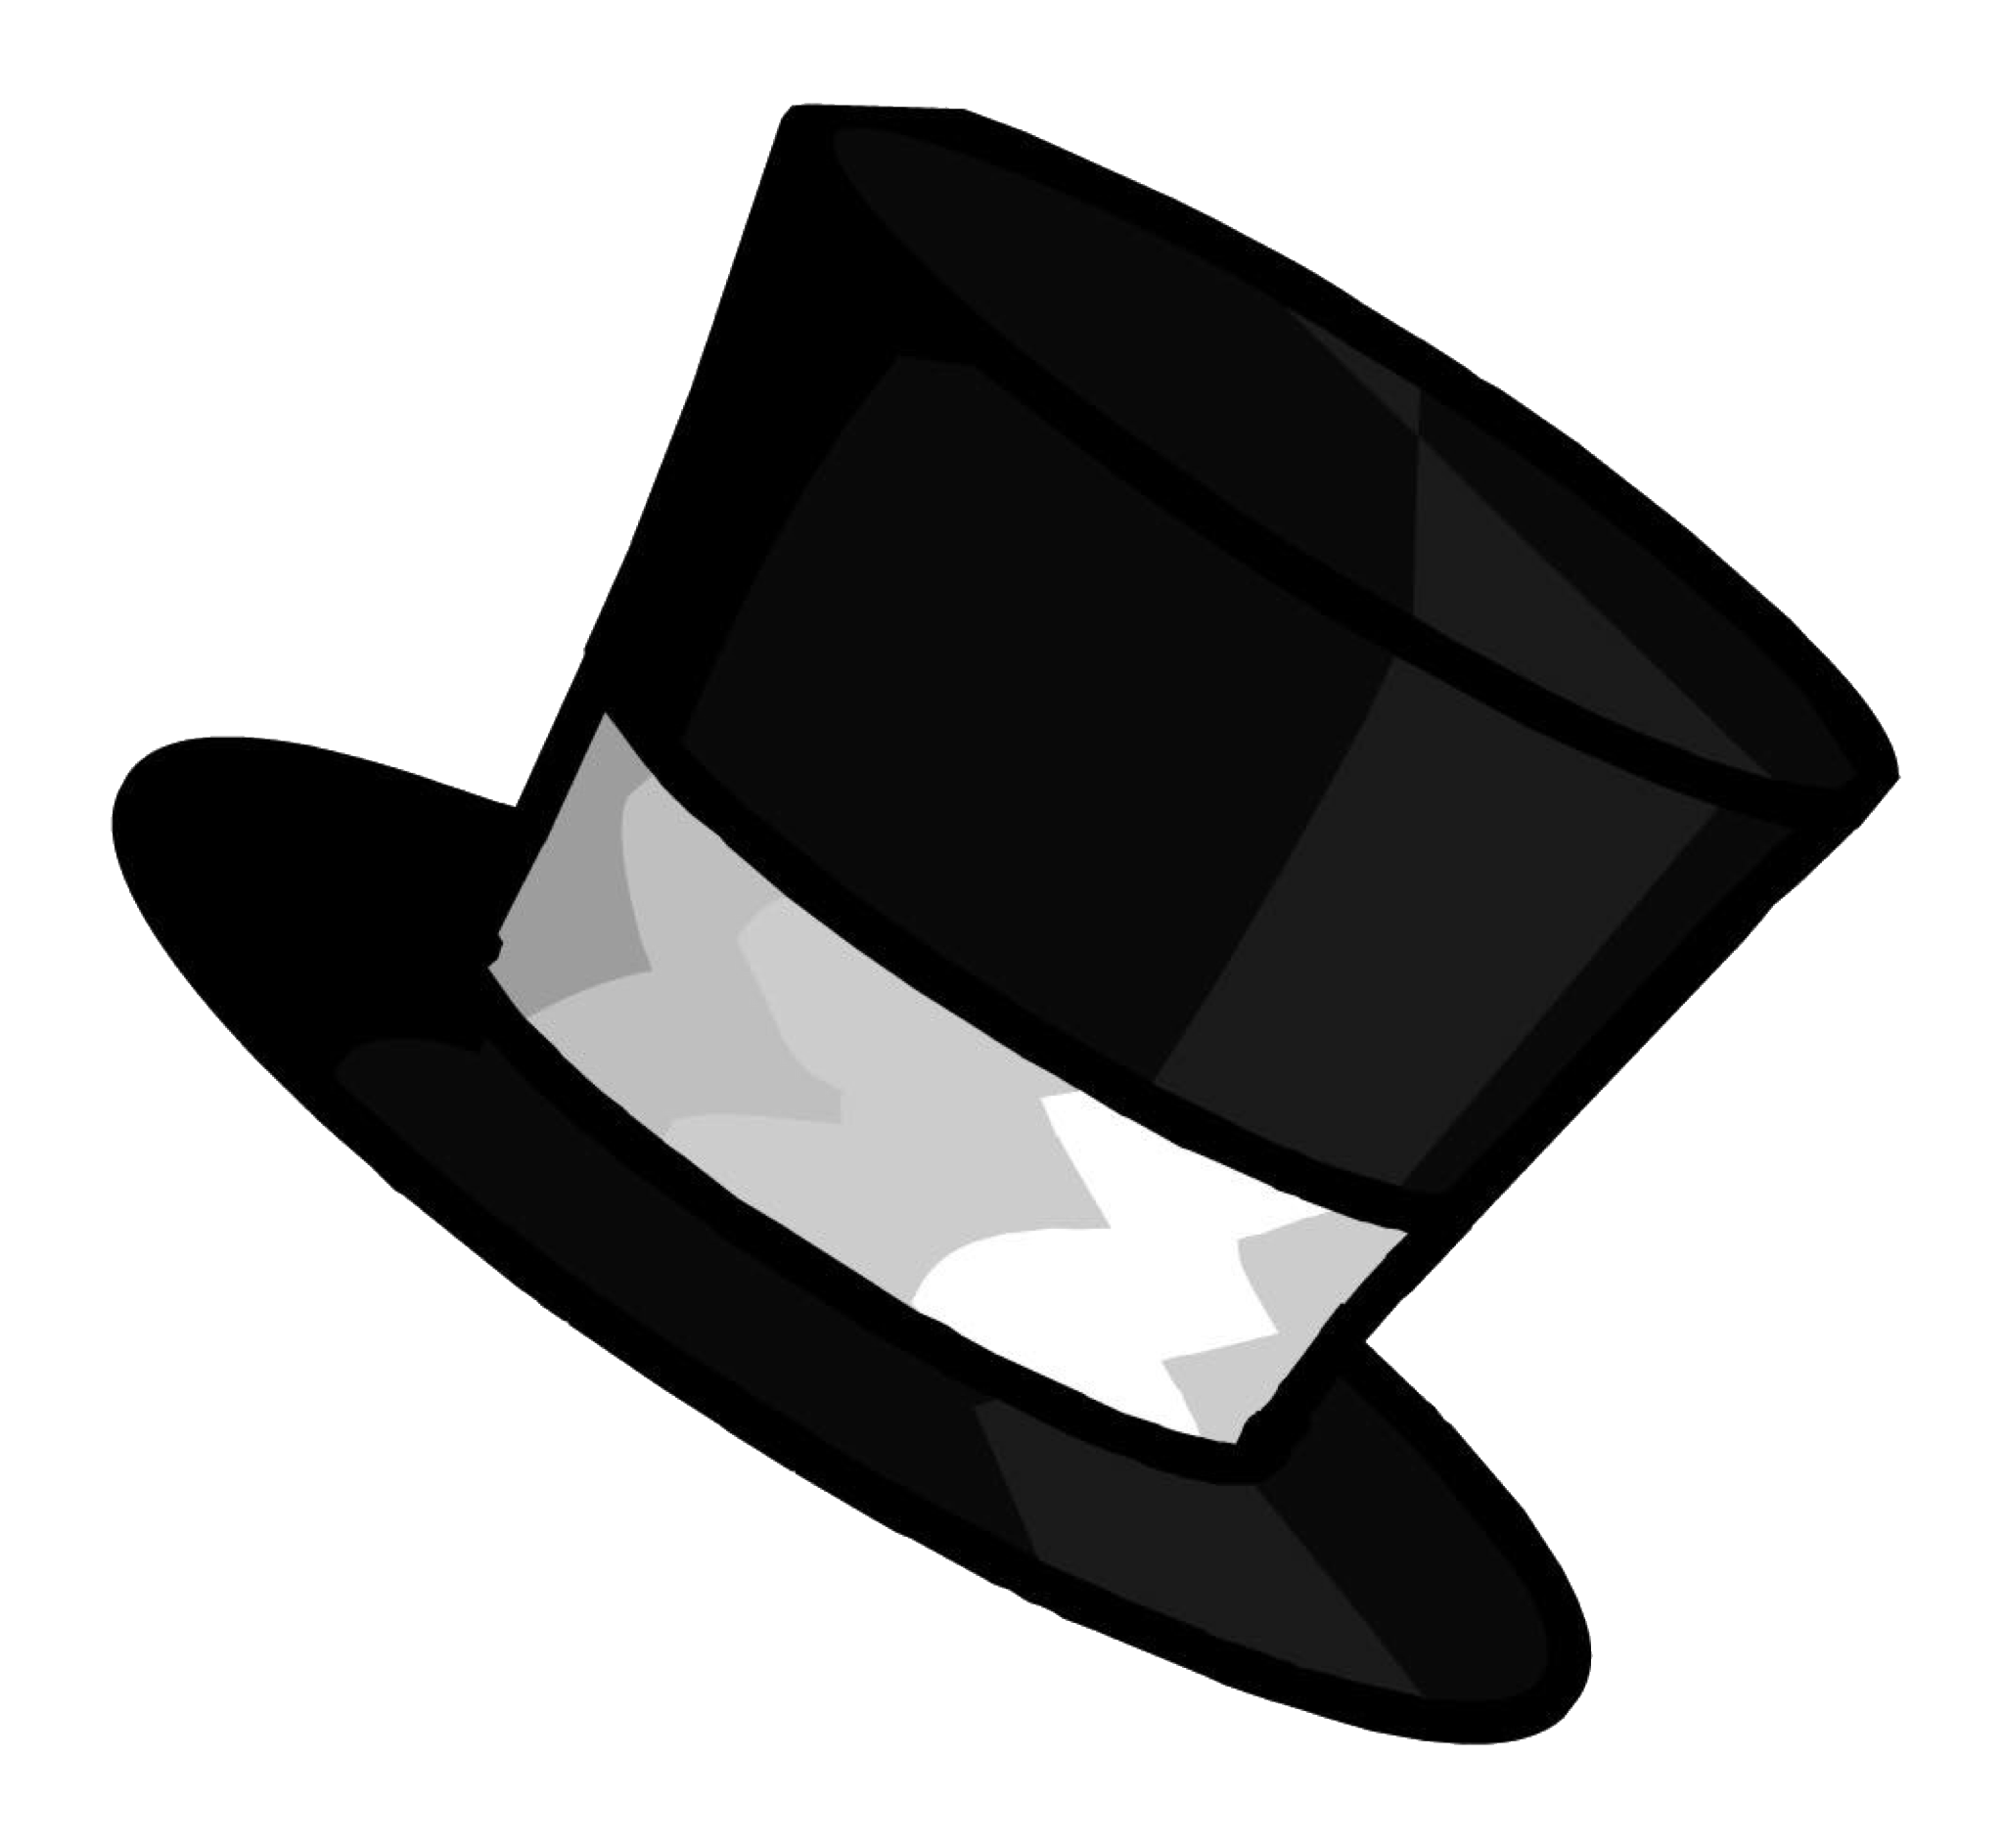 Шляпа мультяшная. Шляпа цилиндр. Мультяшные шляпки. Шляпка без фона. Шляпа поэта